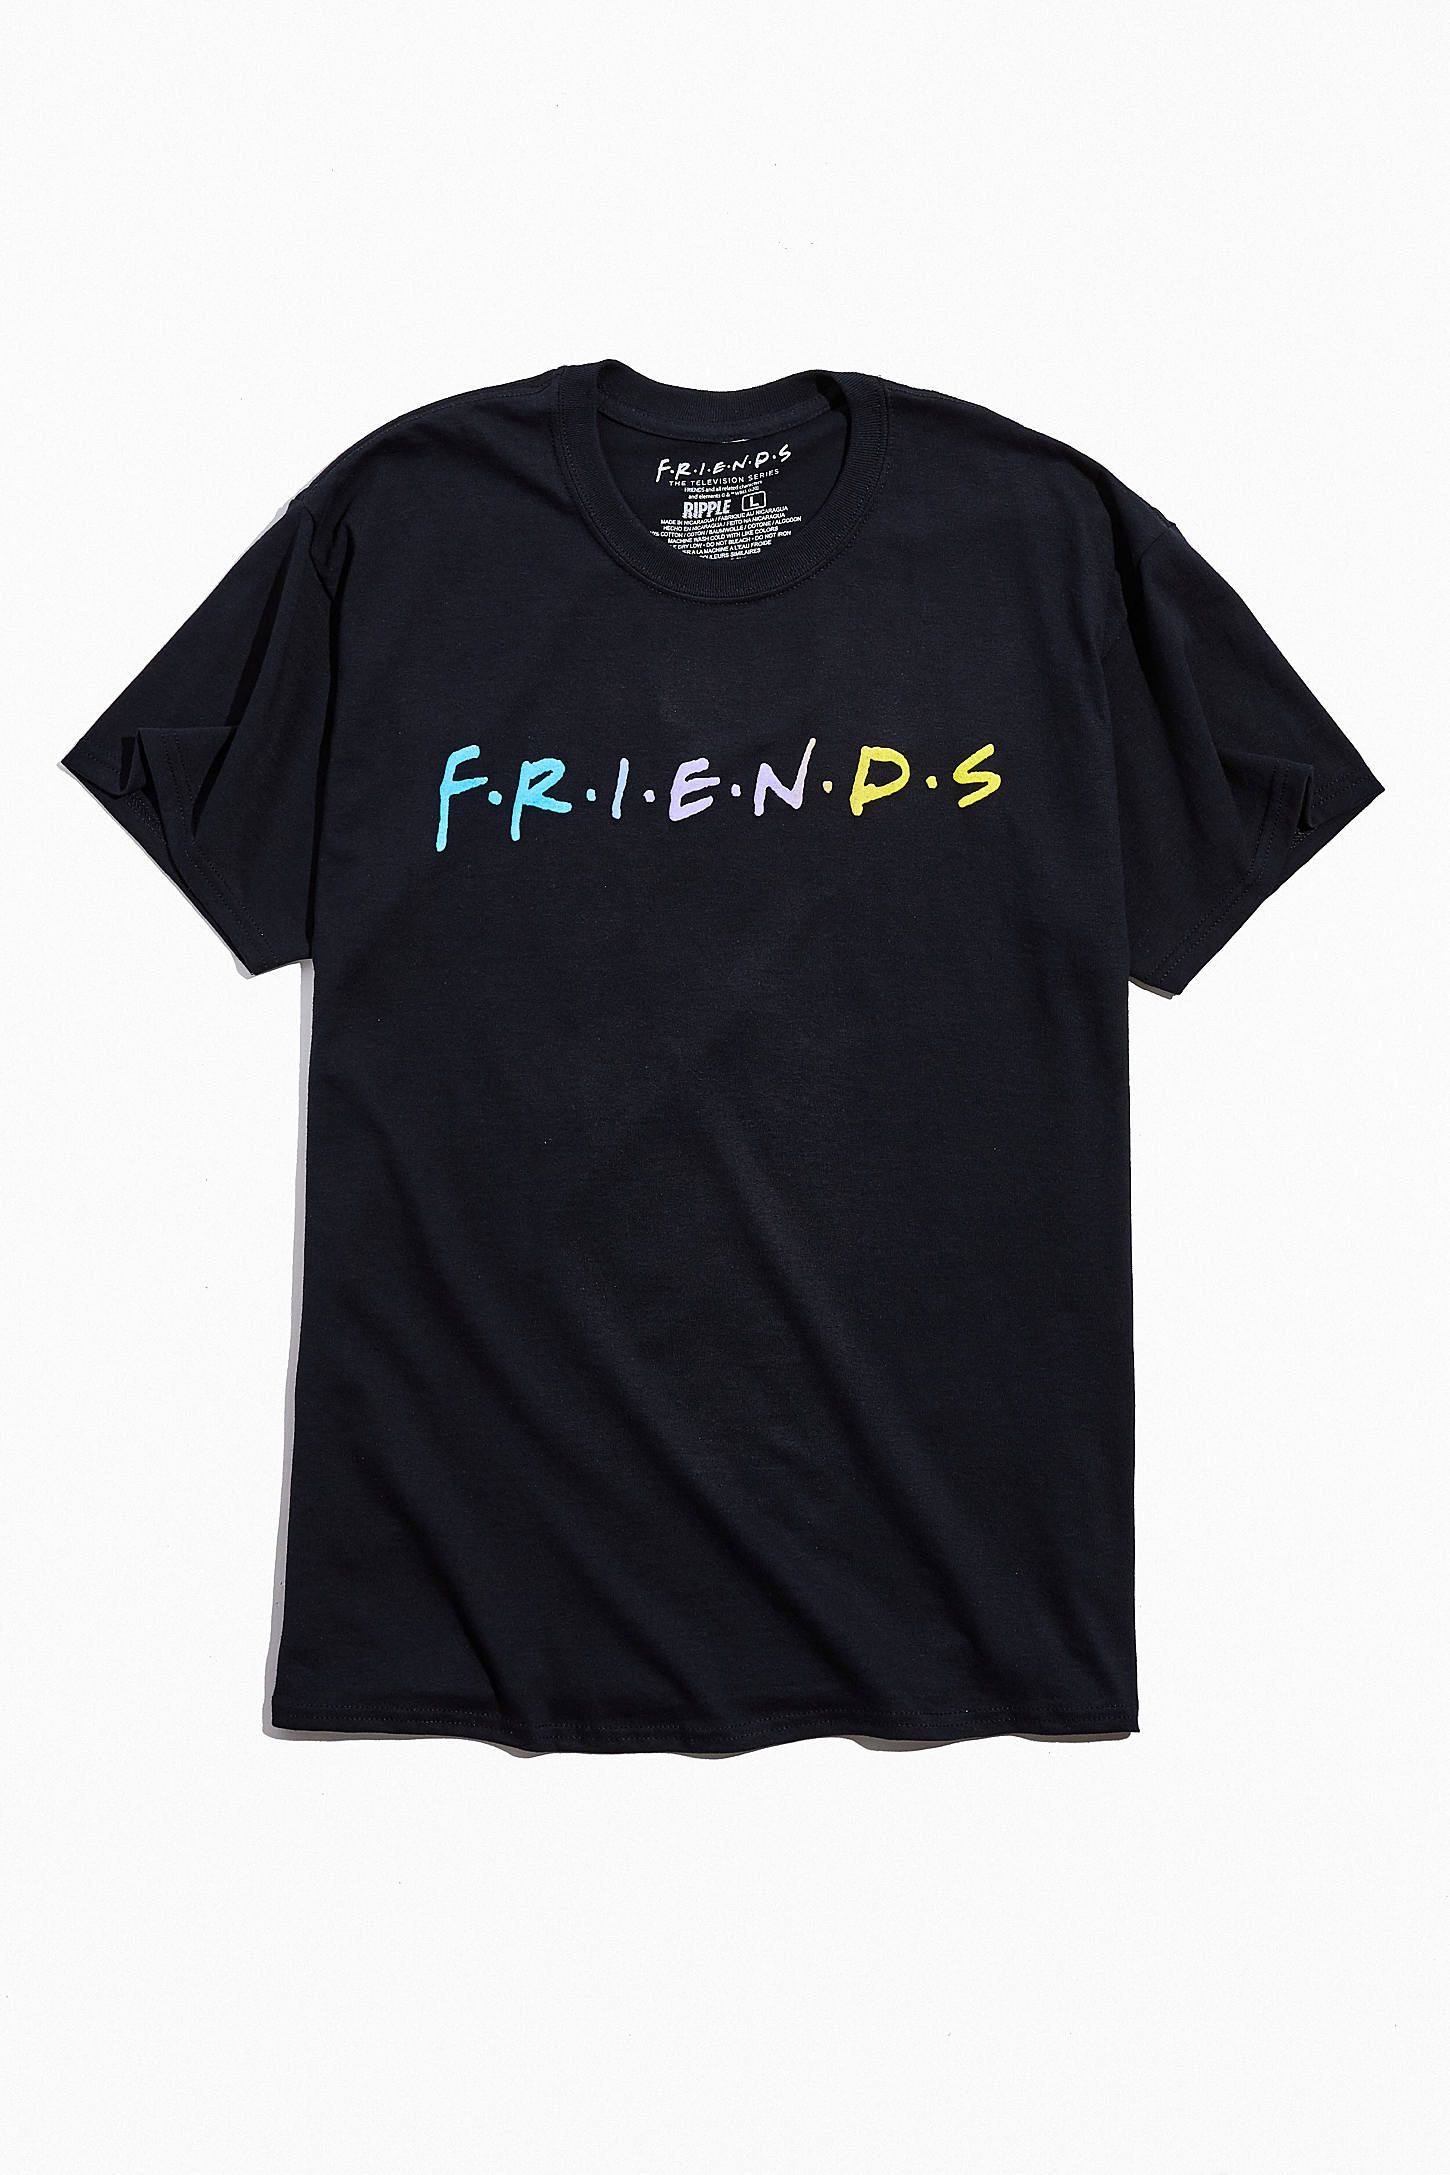 Central Perk tshirt Friends tv show merch friends tv show t shirt friends shirt friendship gift friends shirt bff birthday Friends tshirt